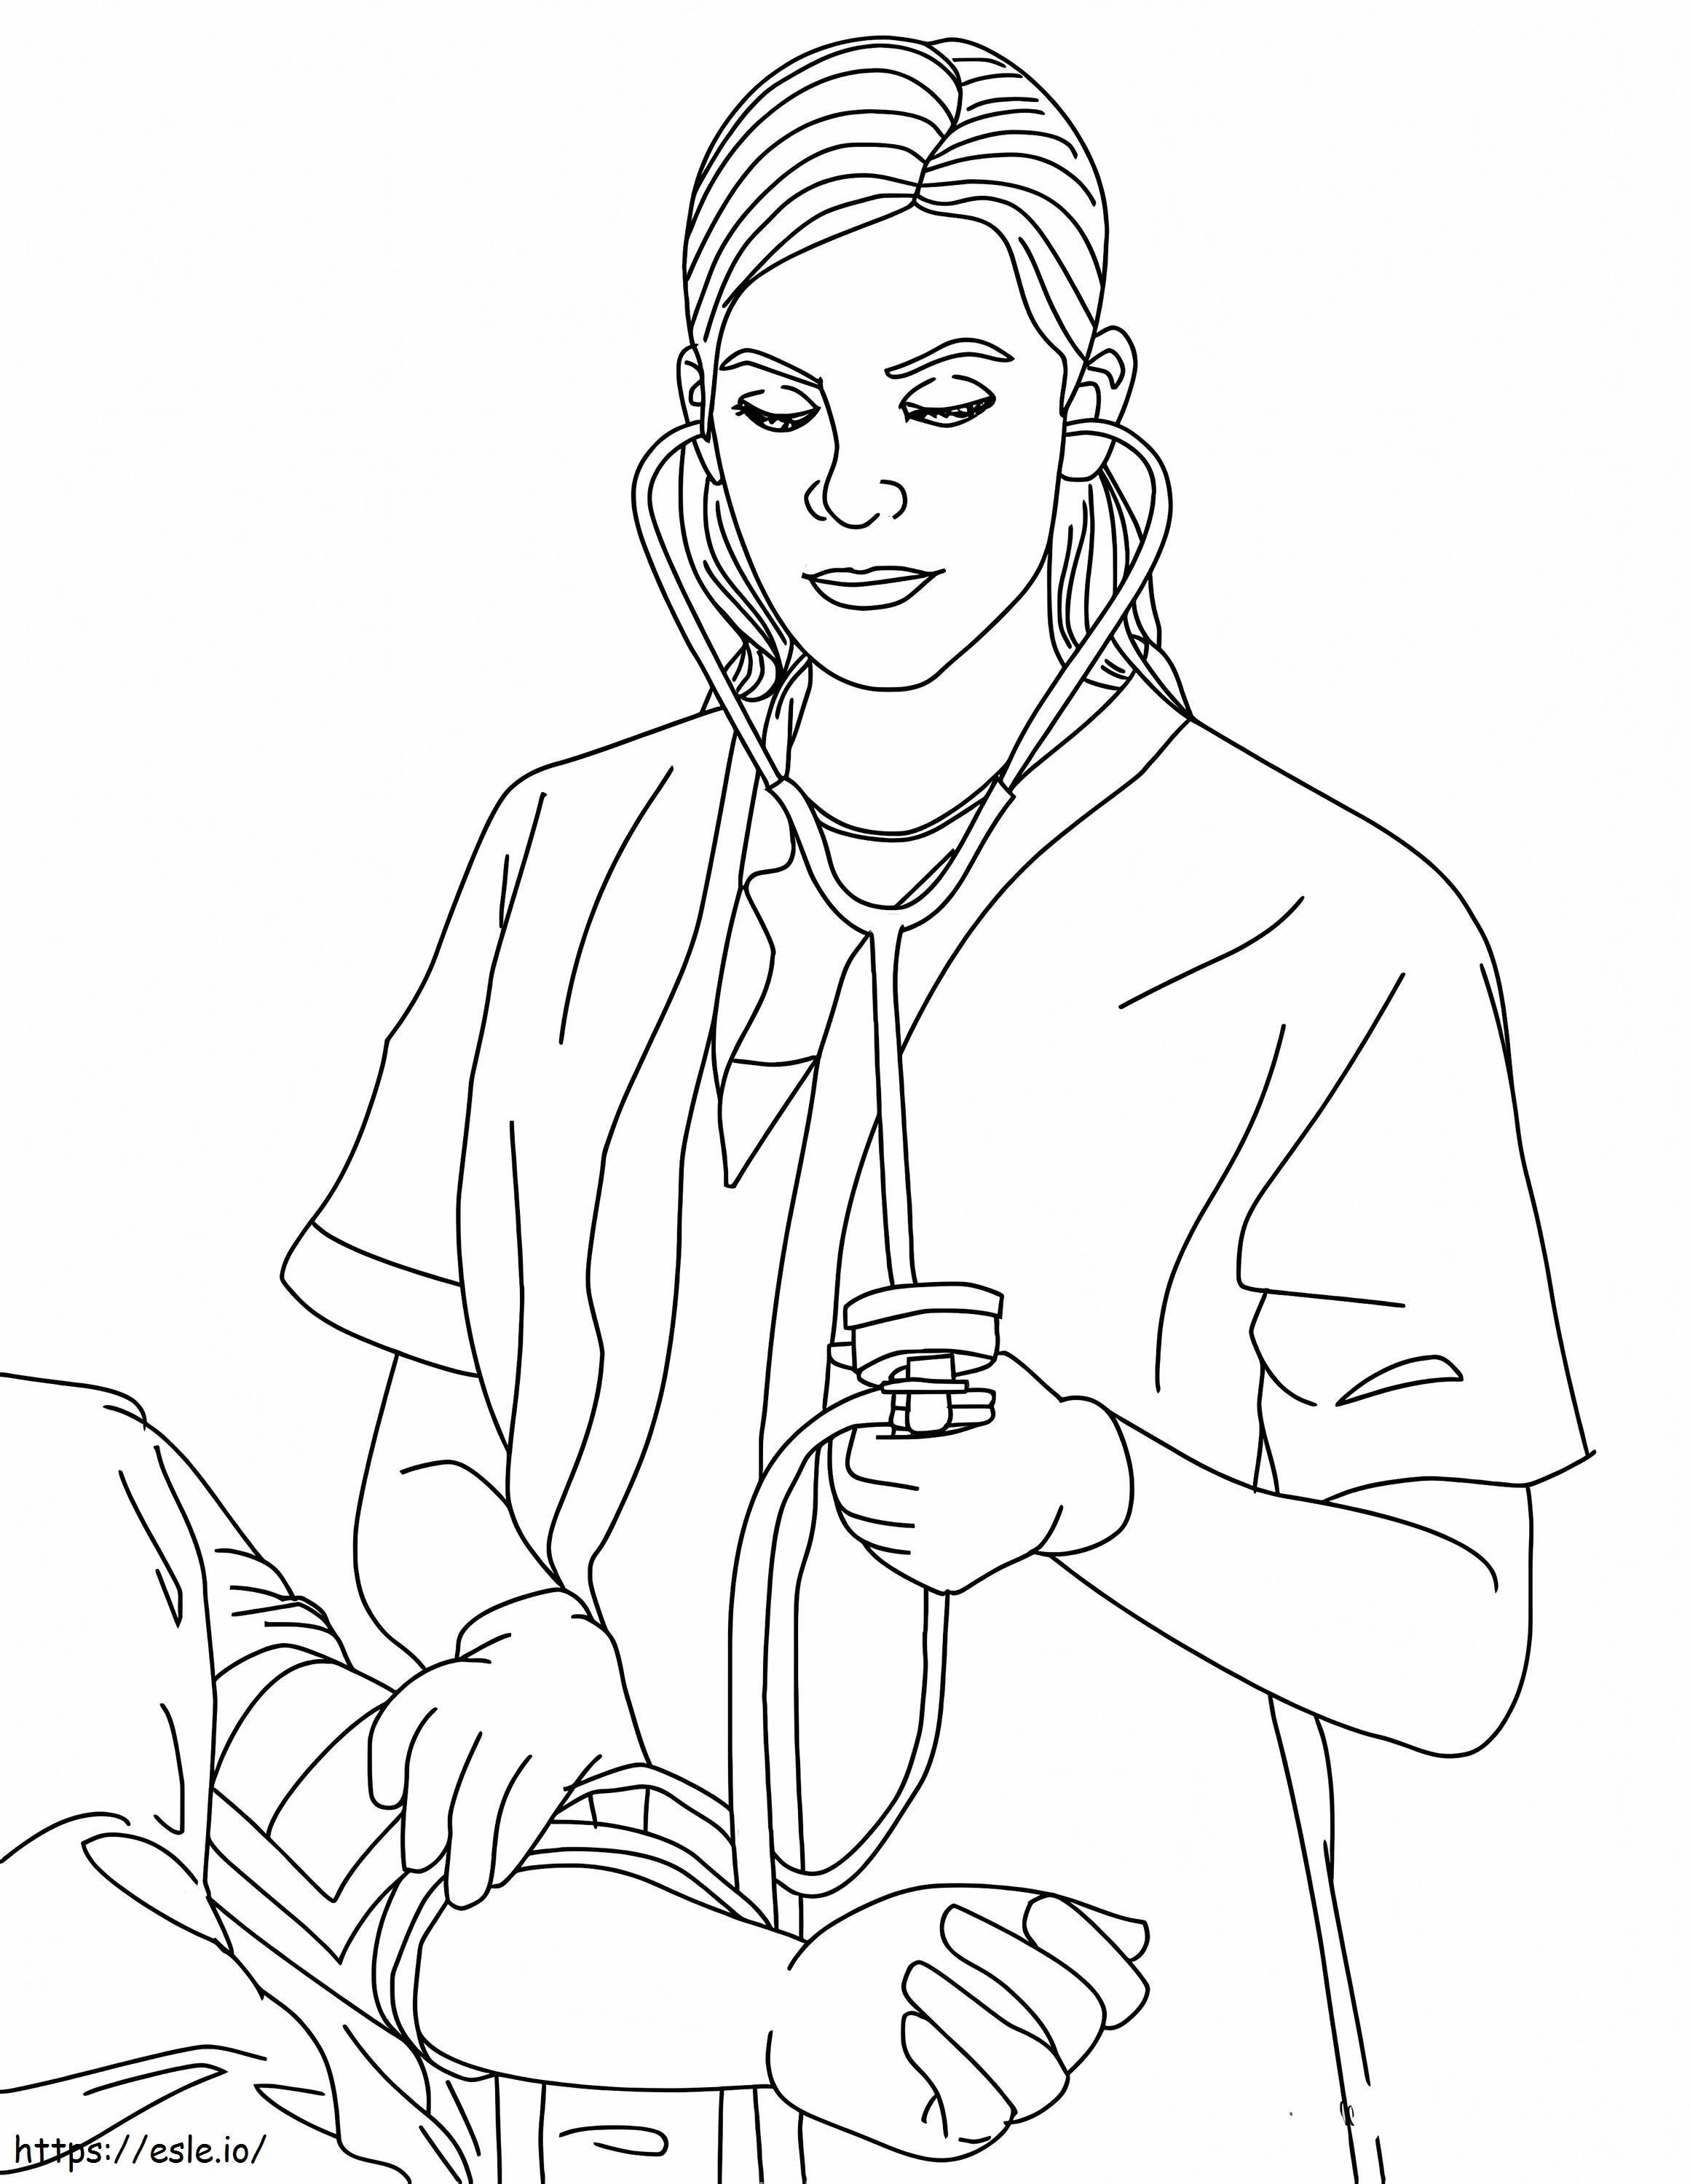 Basic Nurse coloring page